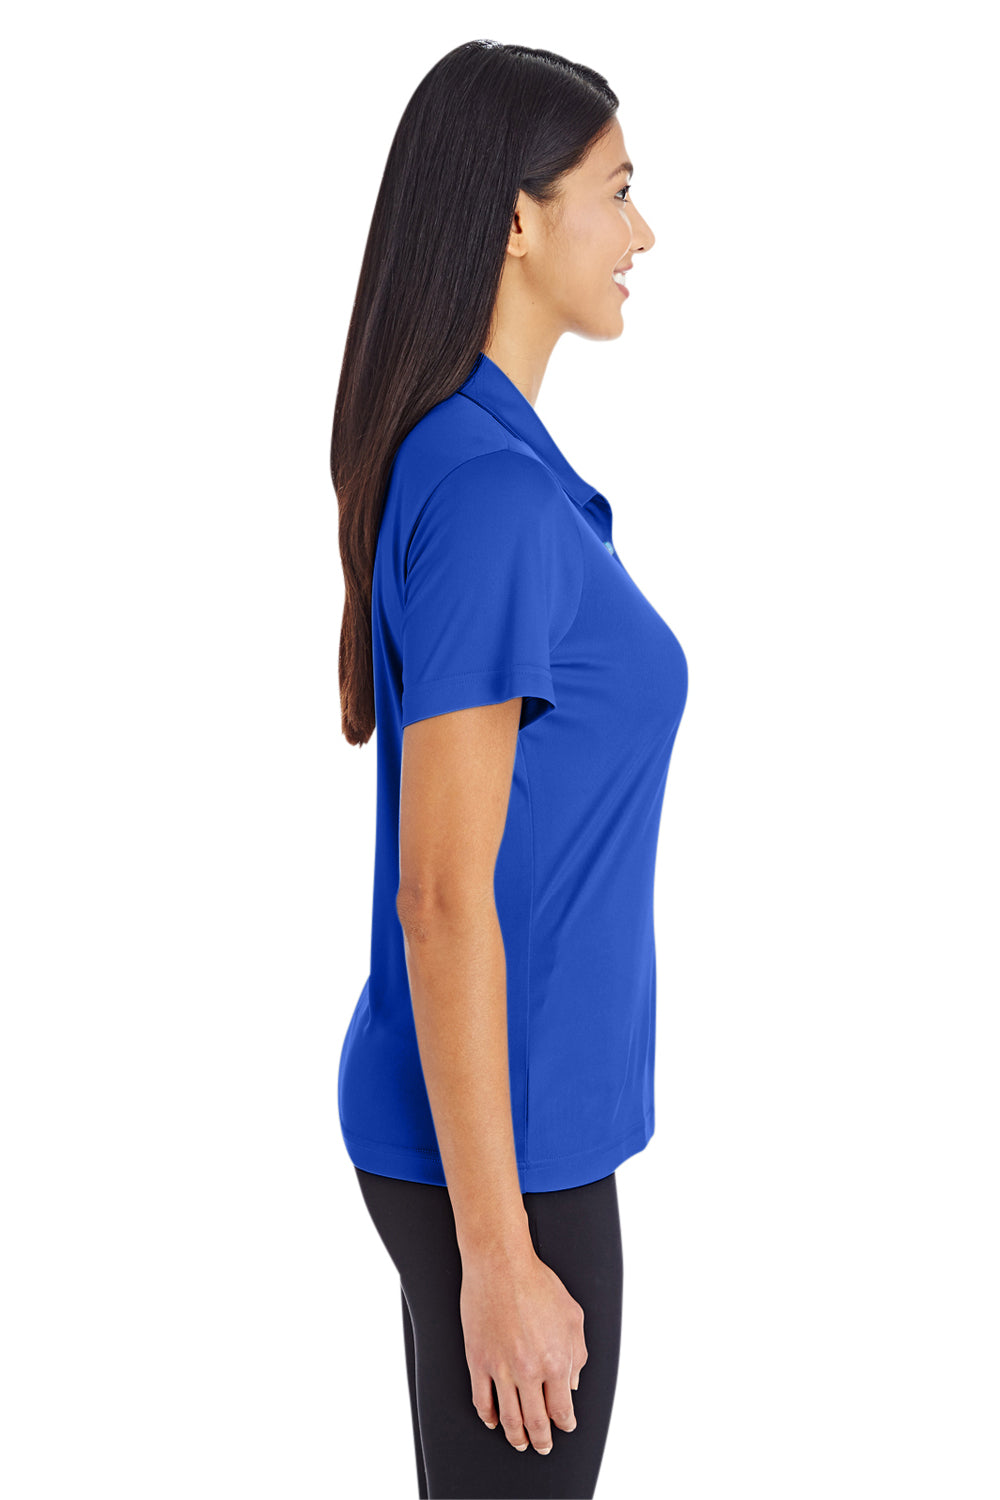 Team 365 TT51W Womens Zone Performance Moisture Wicking Short Sleeve Polo Shirt Royal Blue Side